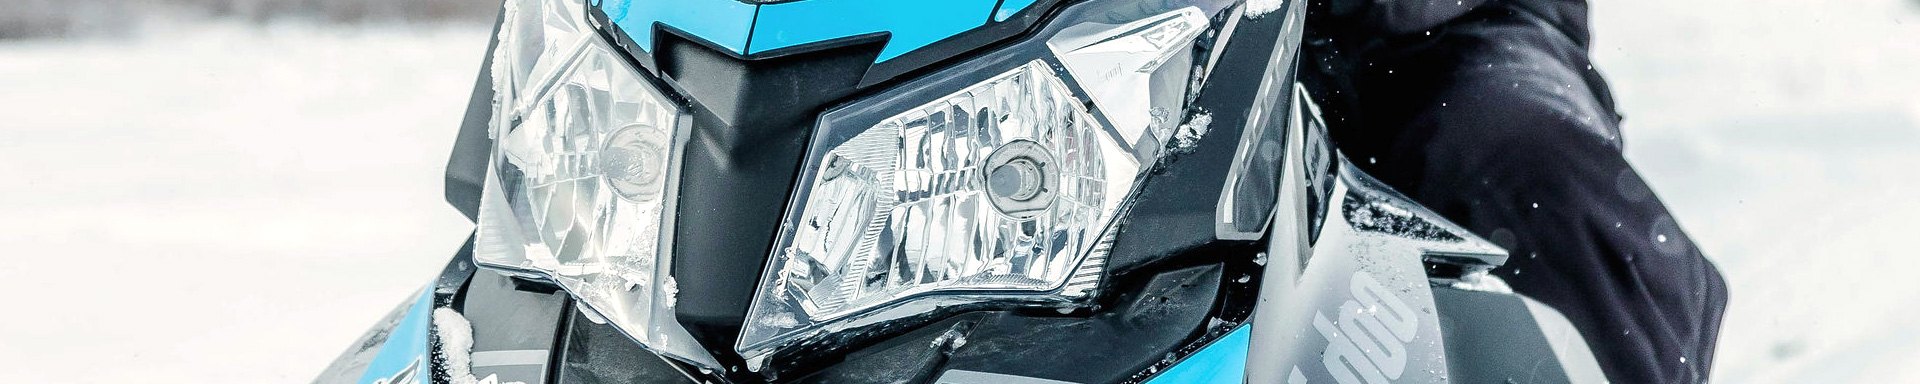 Powersports Motorcycle Headlights